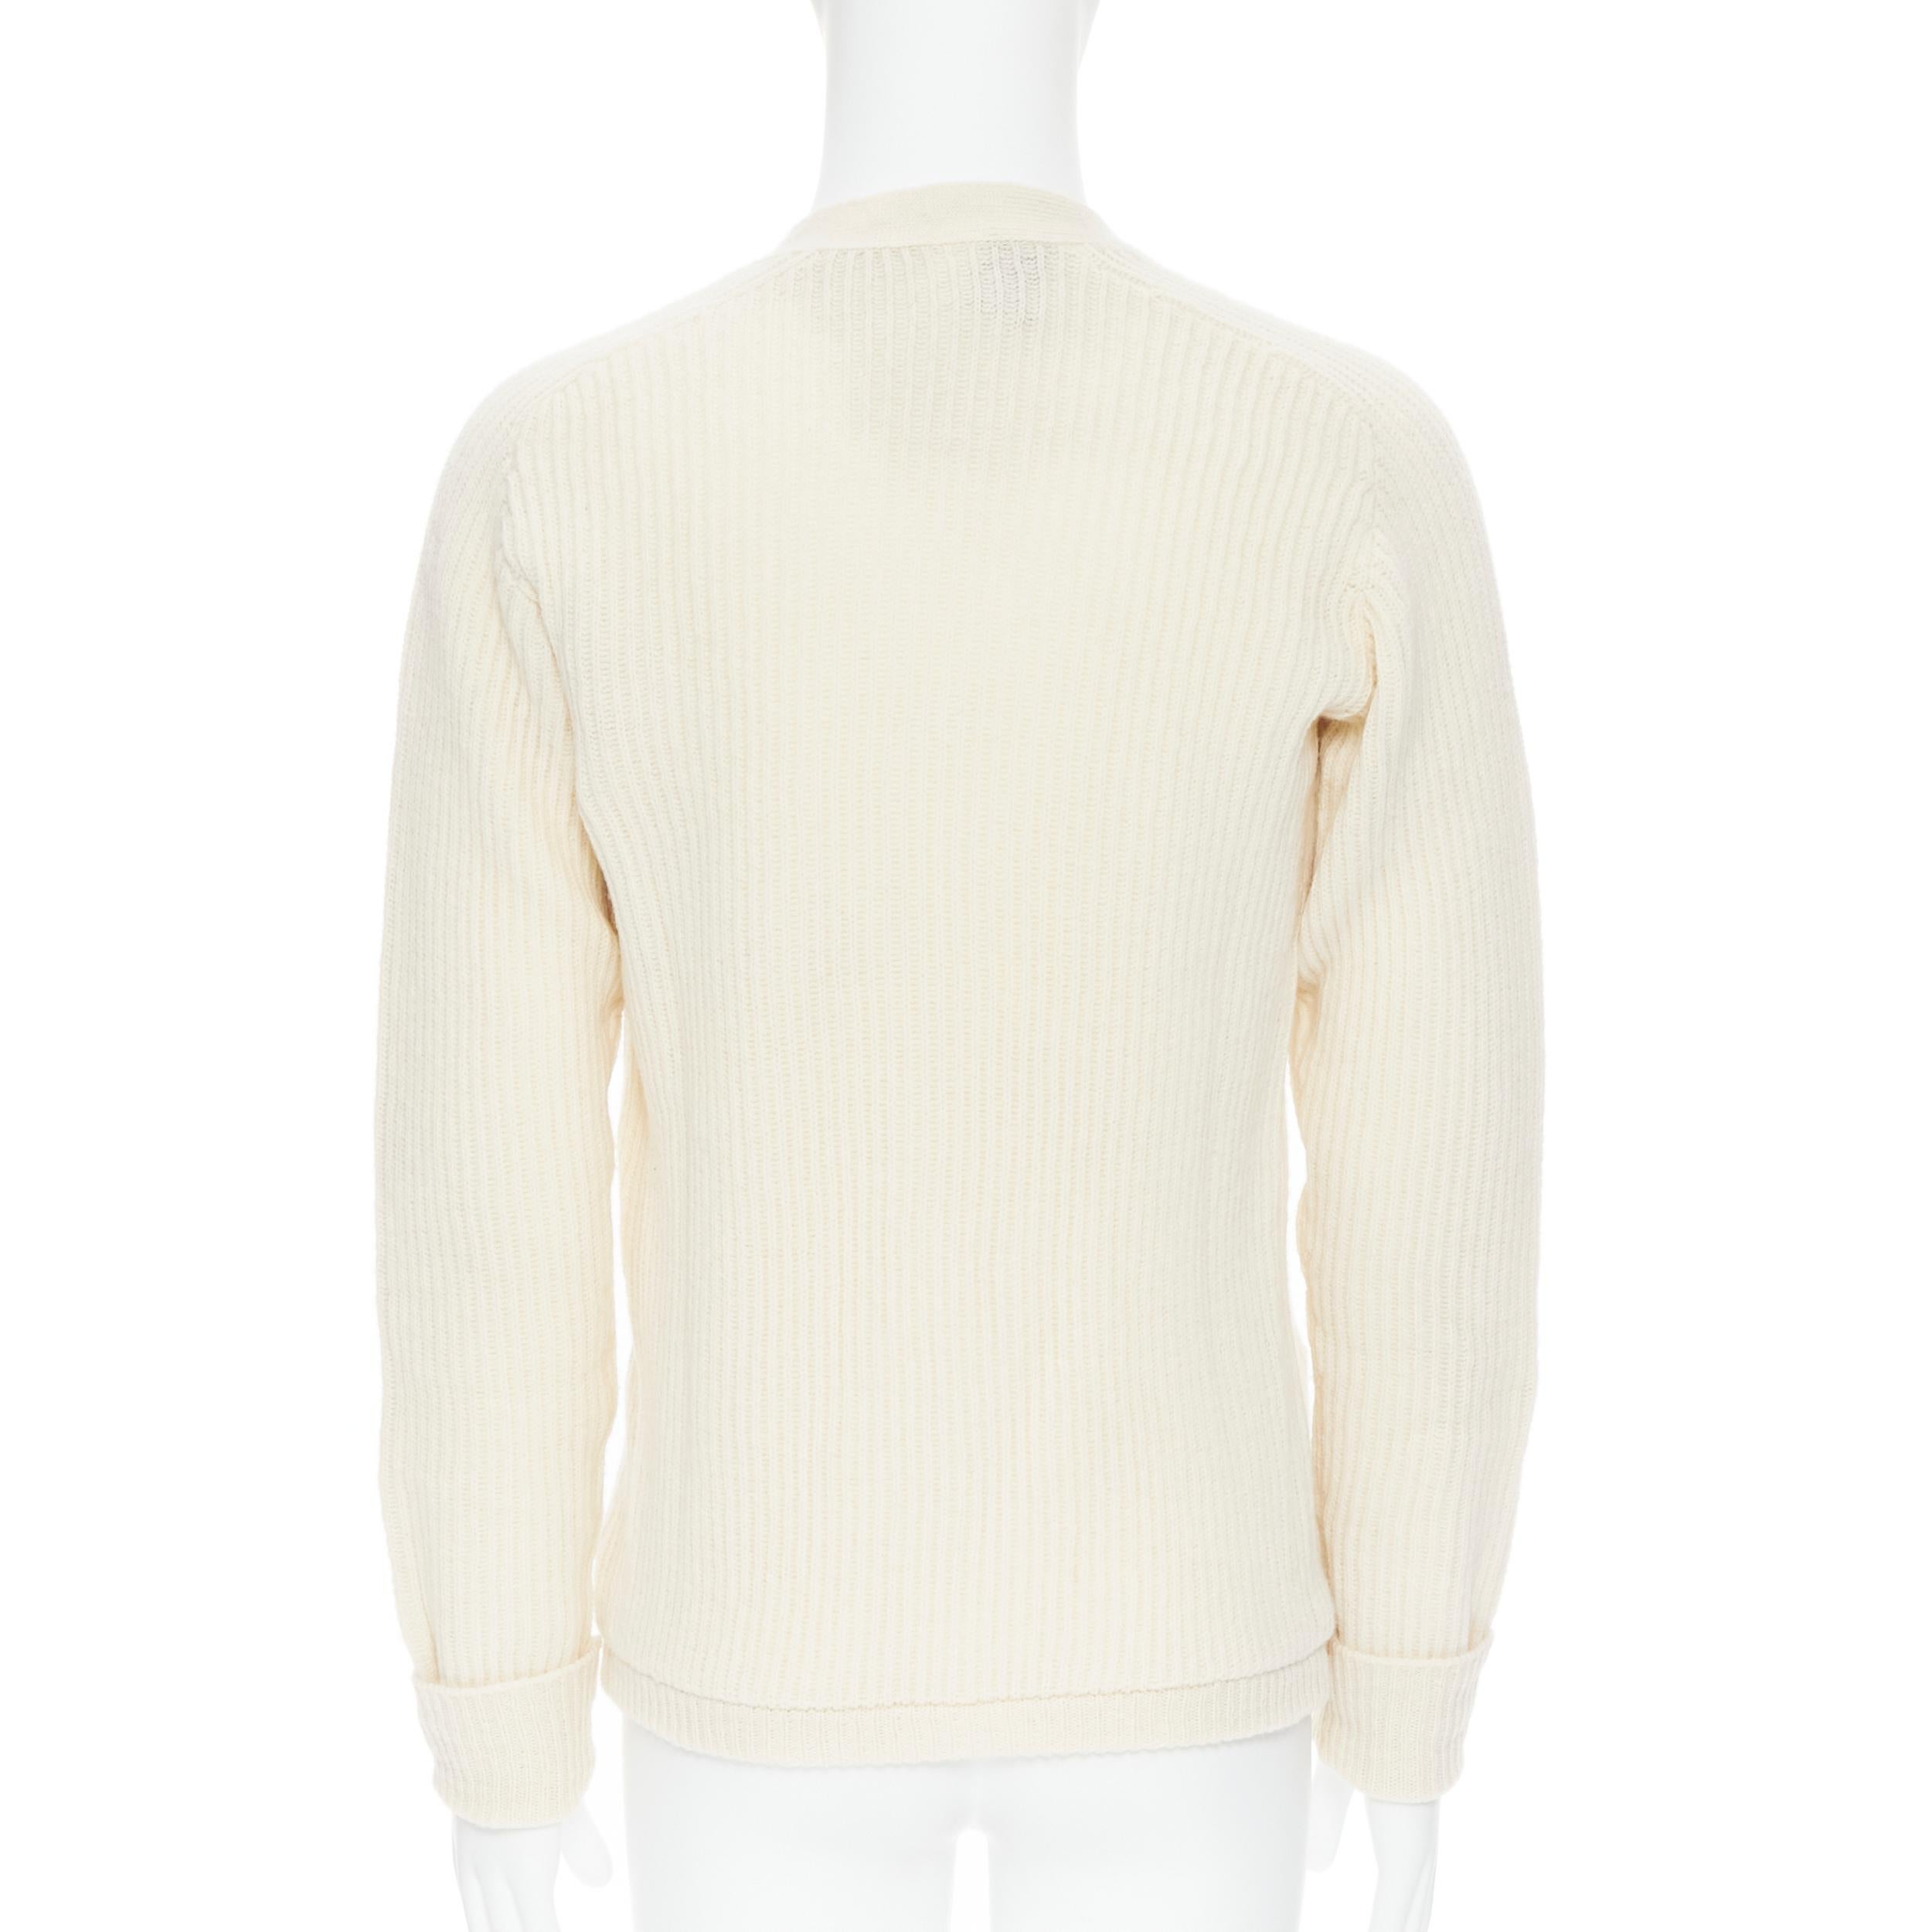 N HOOLYWOOD 100% wool beige ribbed fisherman cardigan sweater UK36 S 1